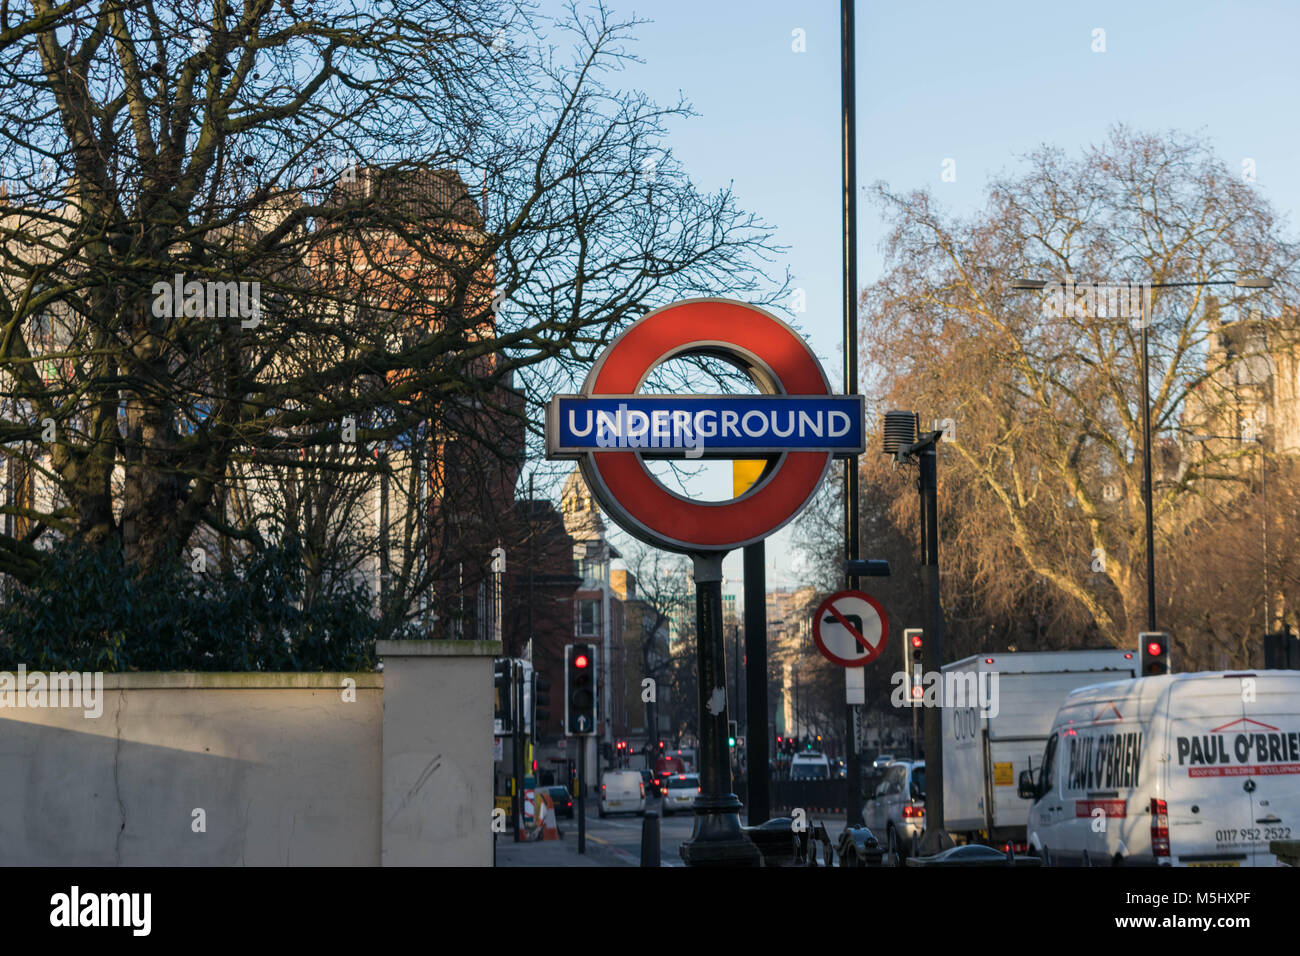 London, United Kingdom, February 17, 2018: London underground sign on the background of a park. Stock Photo